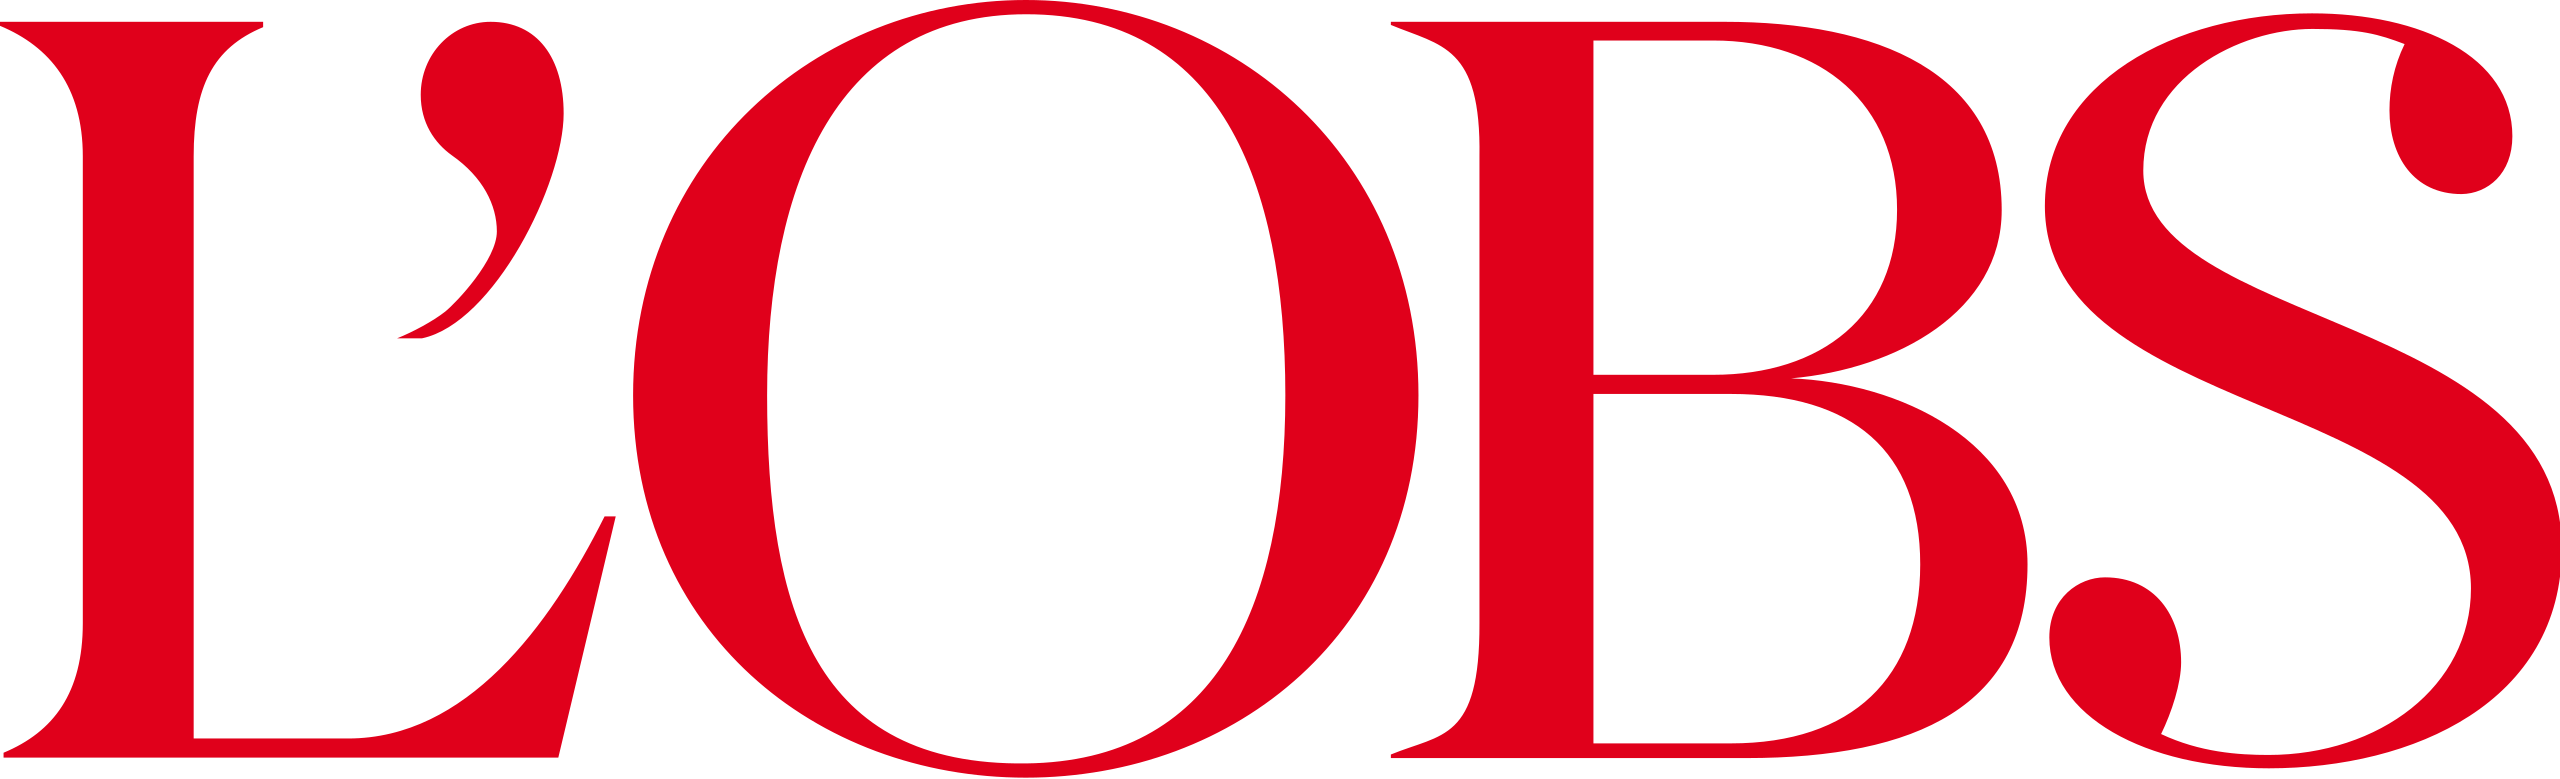 Lobs logo